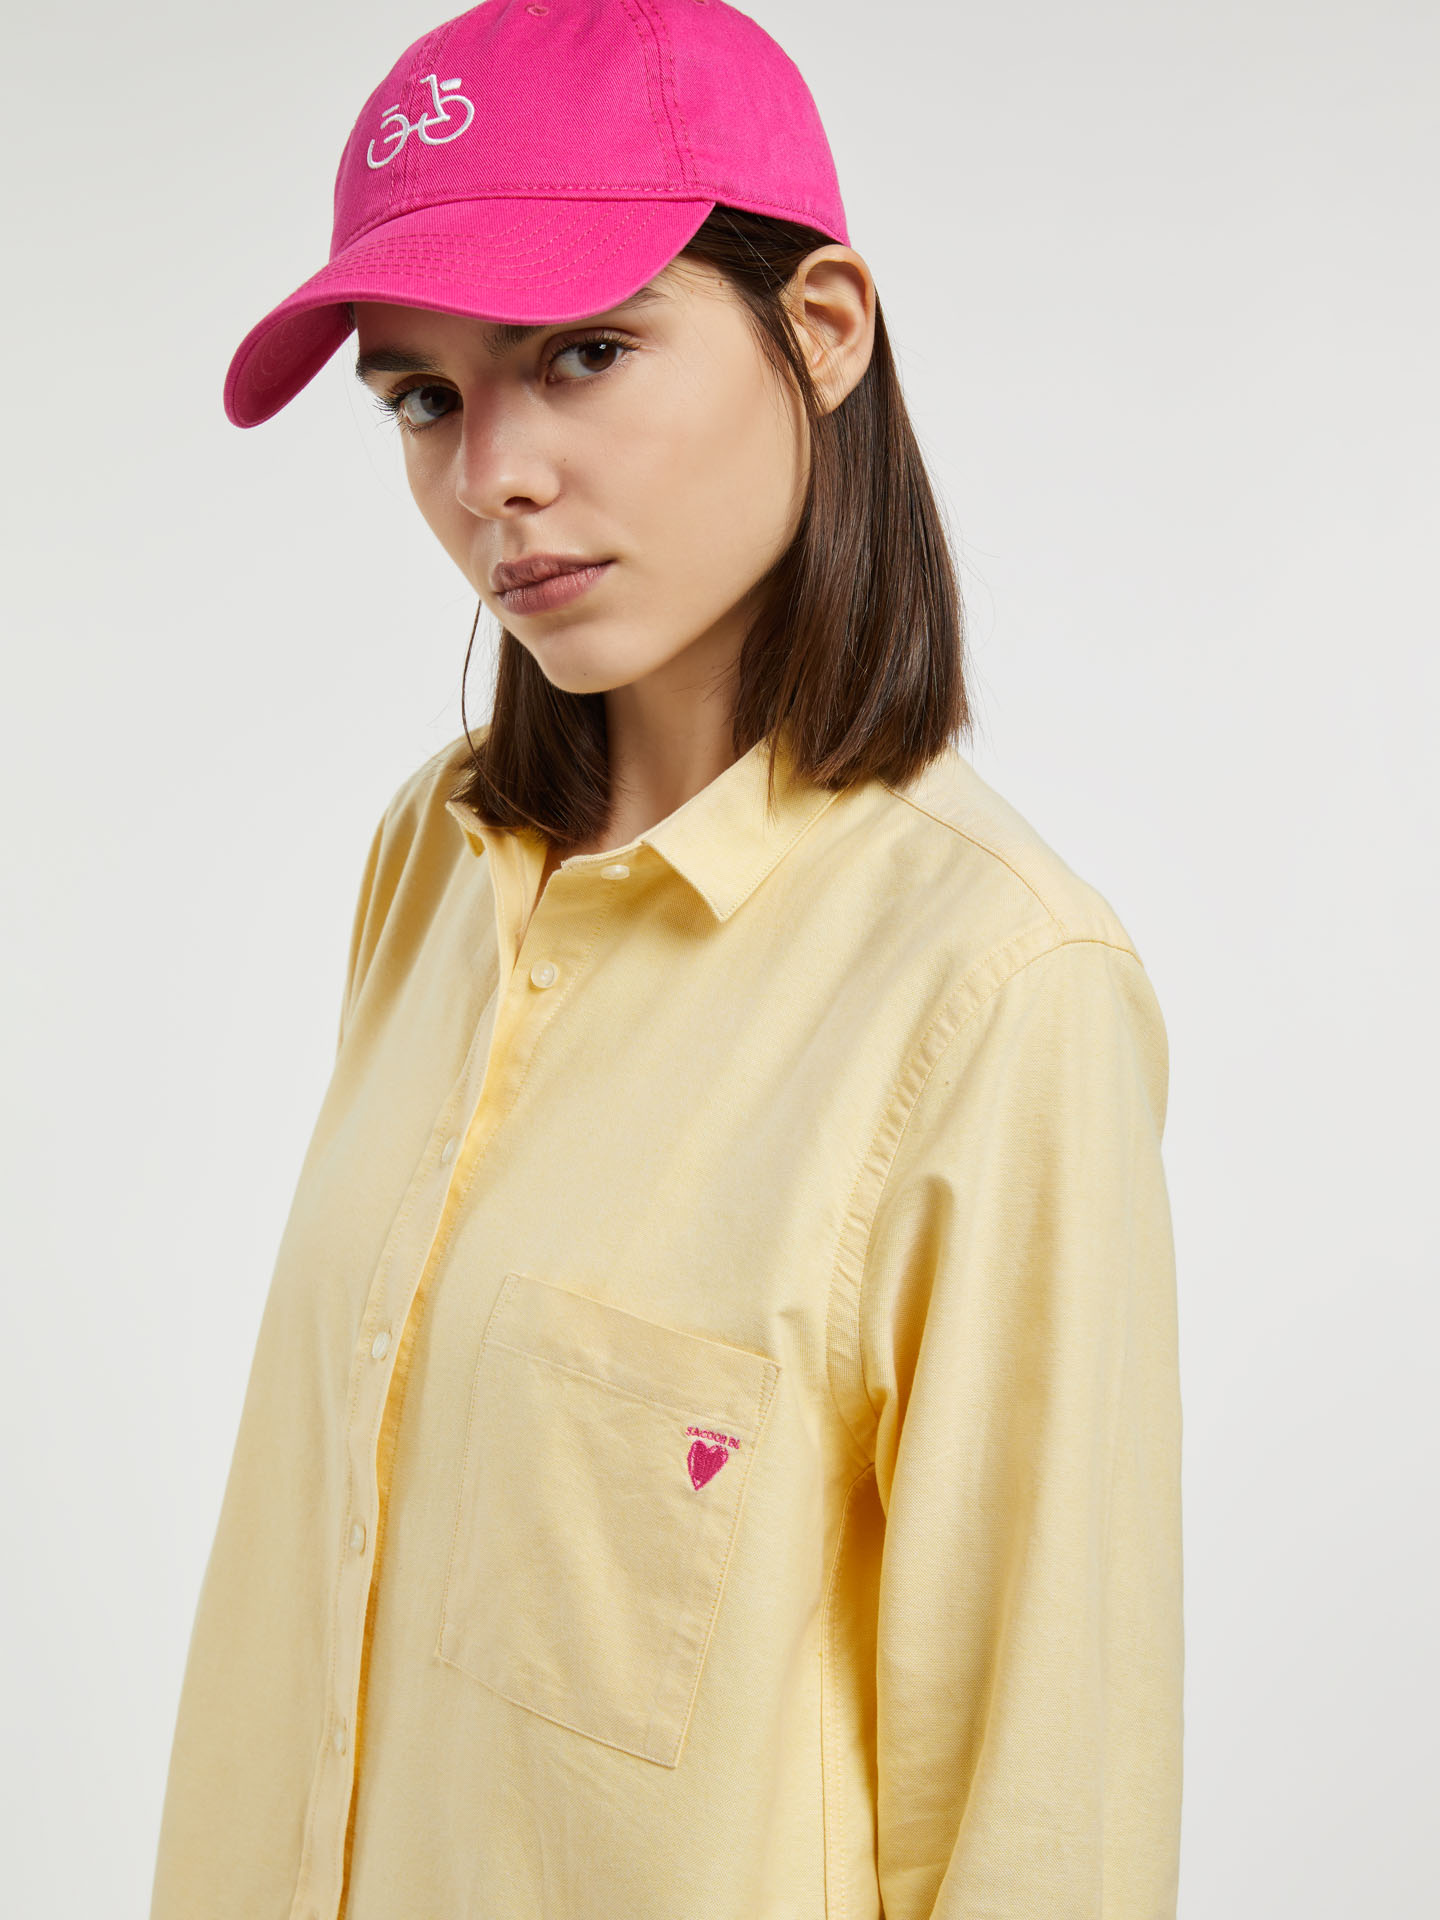 Shirt Sport Light Yellow Casual Woman